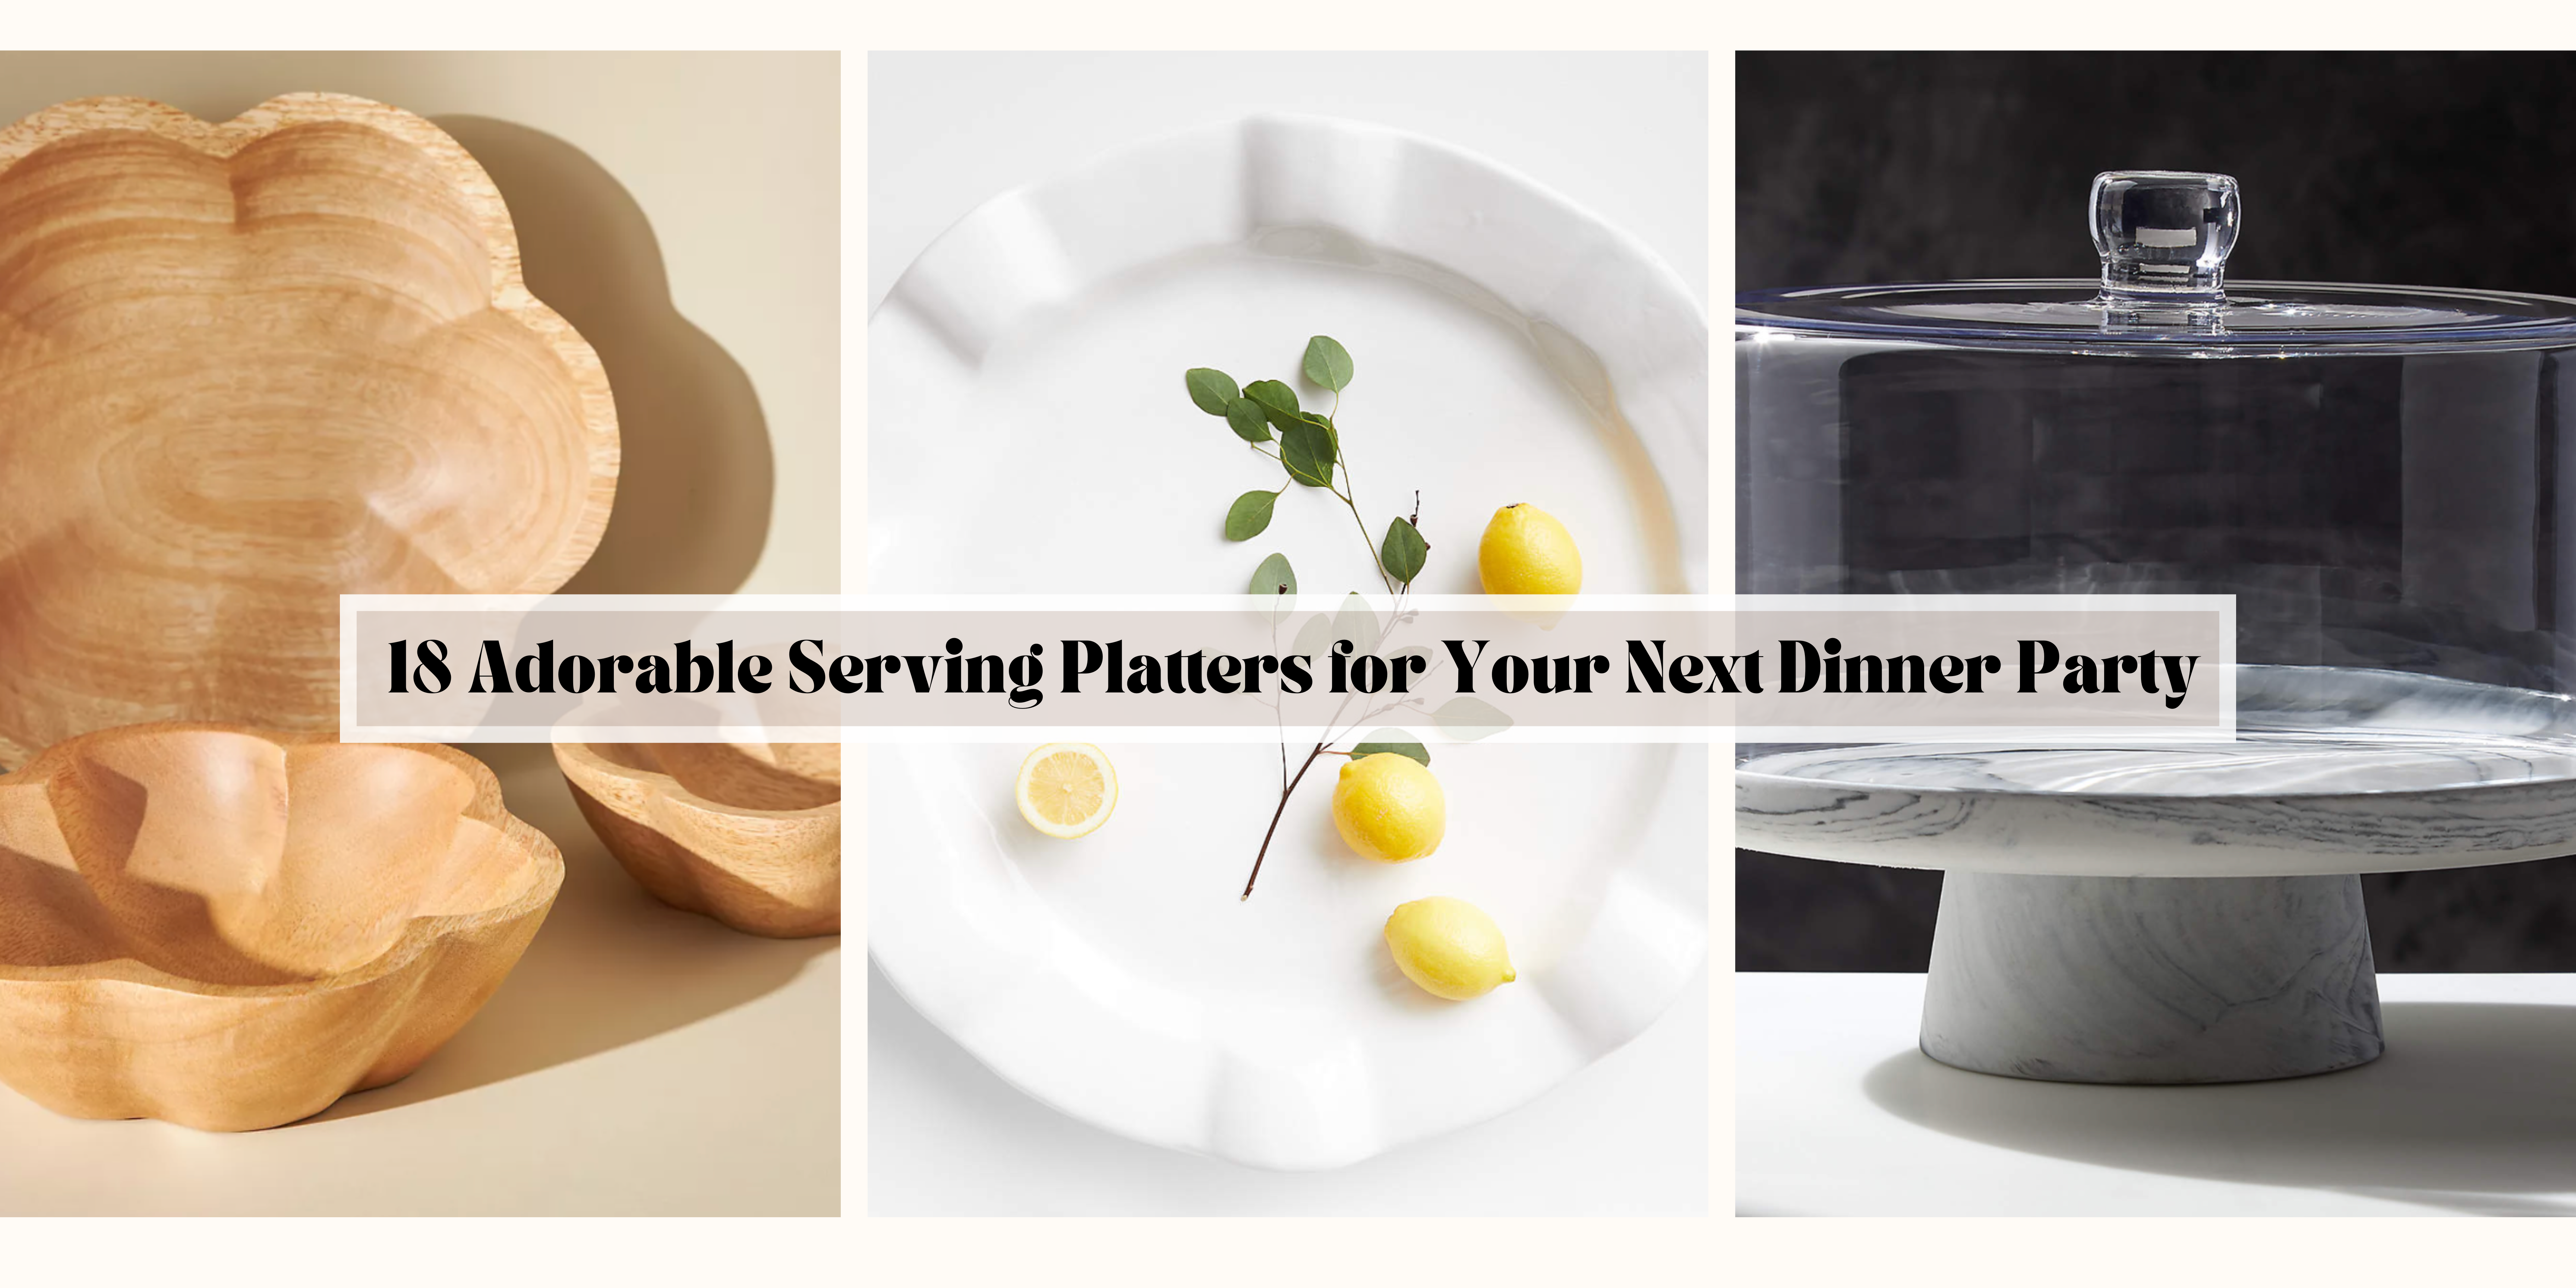 Adorable Serving Platters